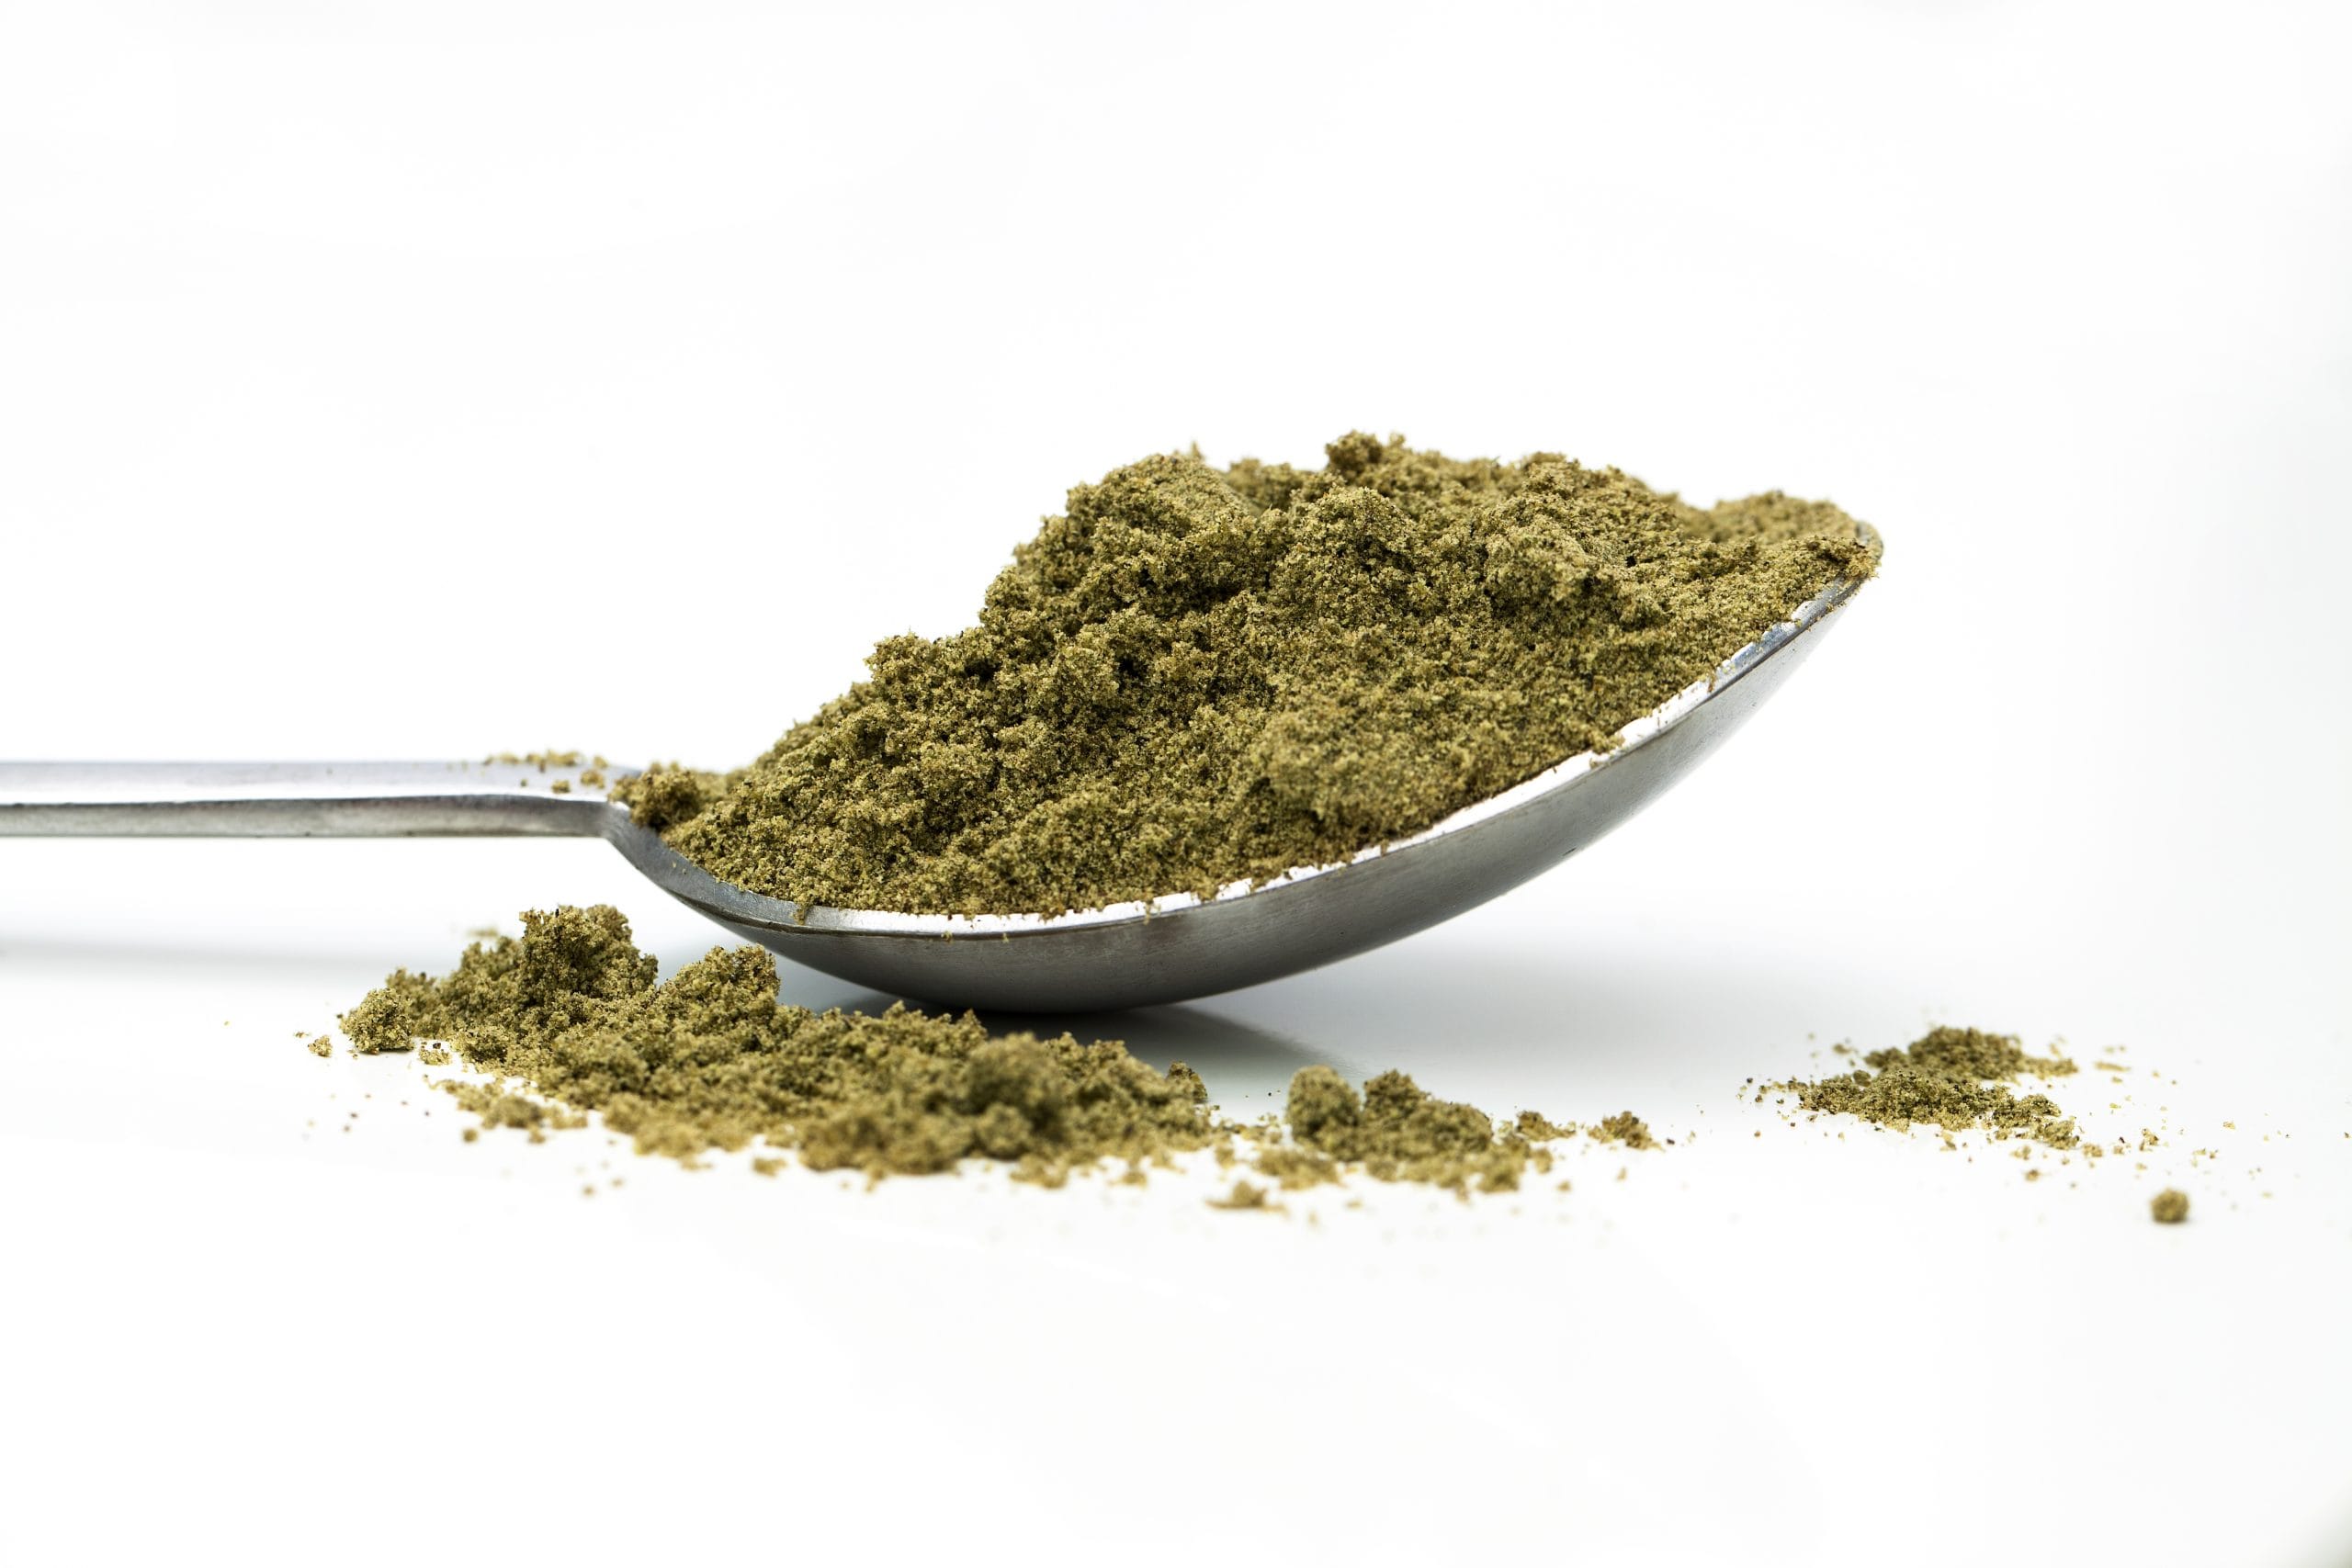 Hemp: A spoonful of green hemp powder